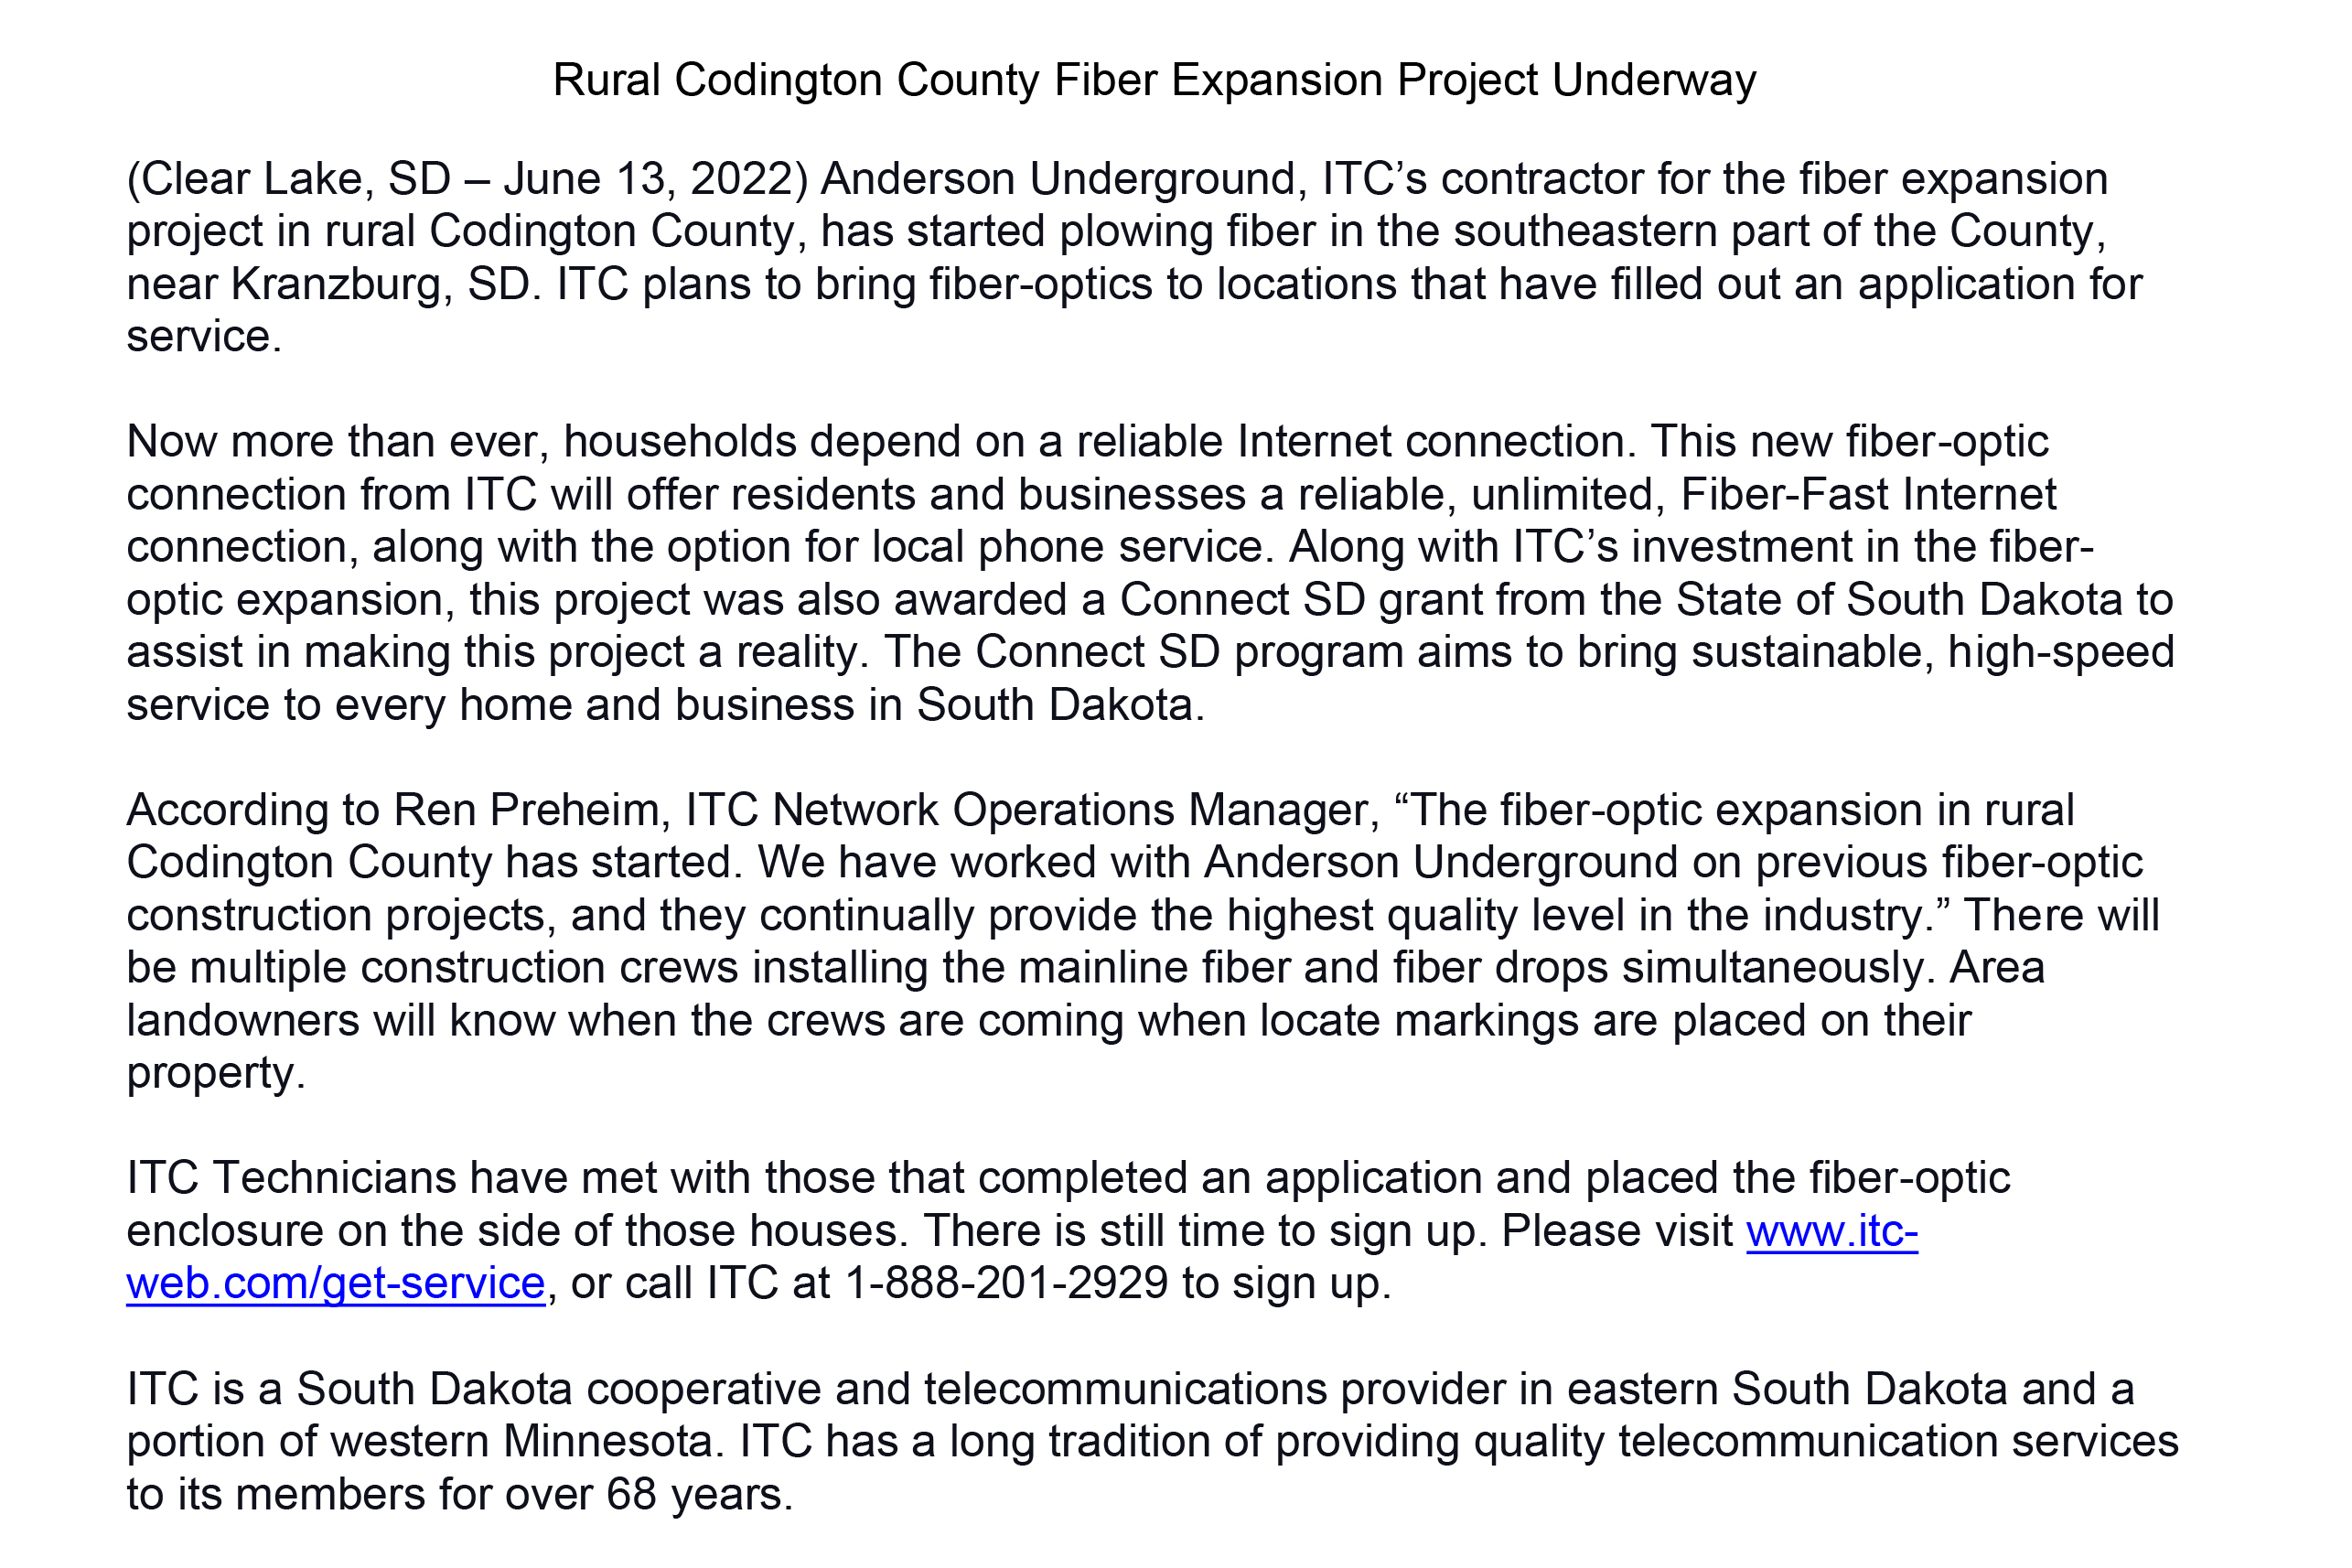 ITC Press Release 6.13.22.jpg